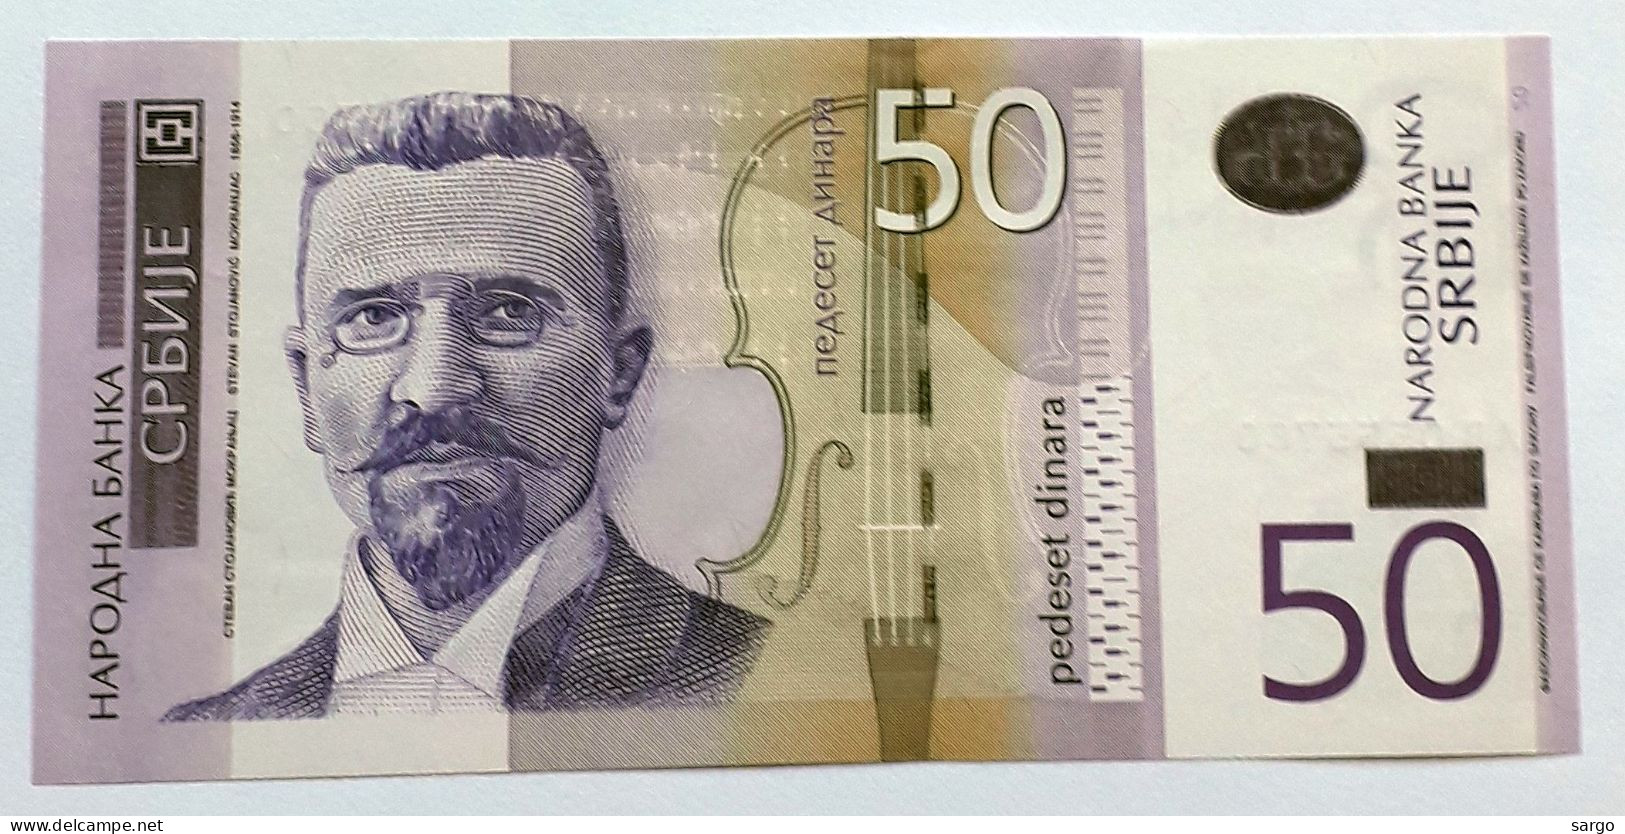 SERBIA - 50 DINARA  - P 56A  (2011)  - UNC -  BANKNOTES - PAPER MONEY - CARTAMONETA - - Serbia